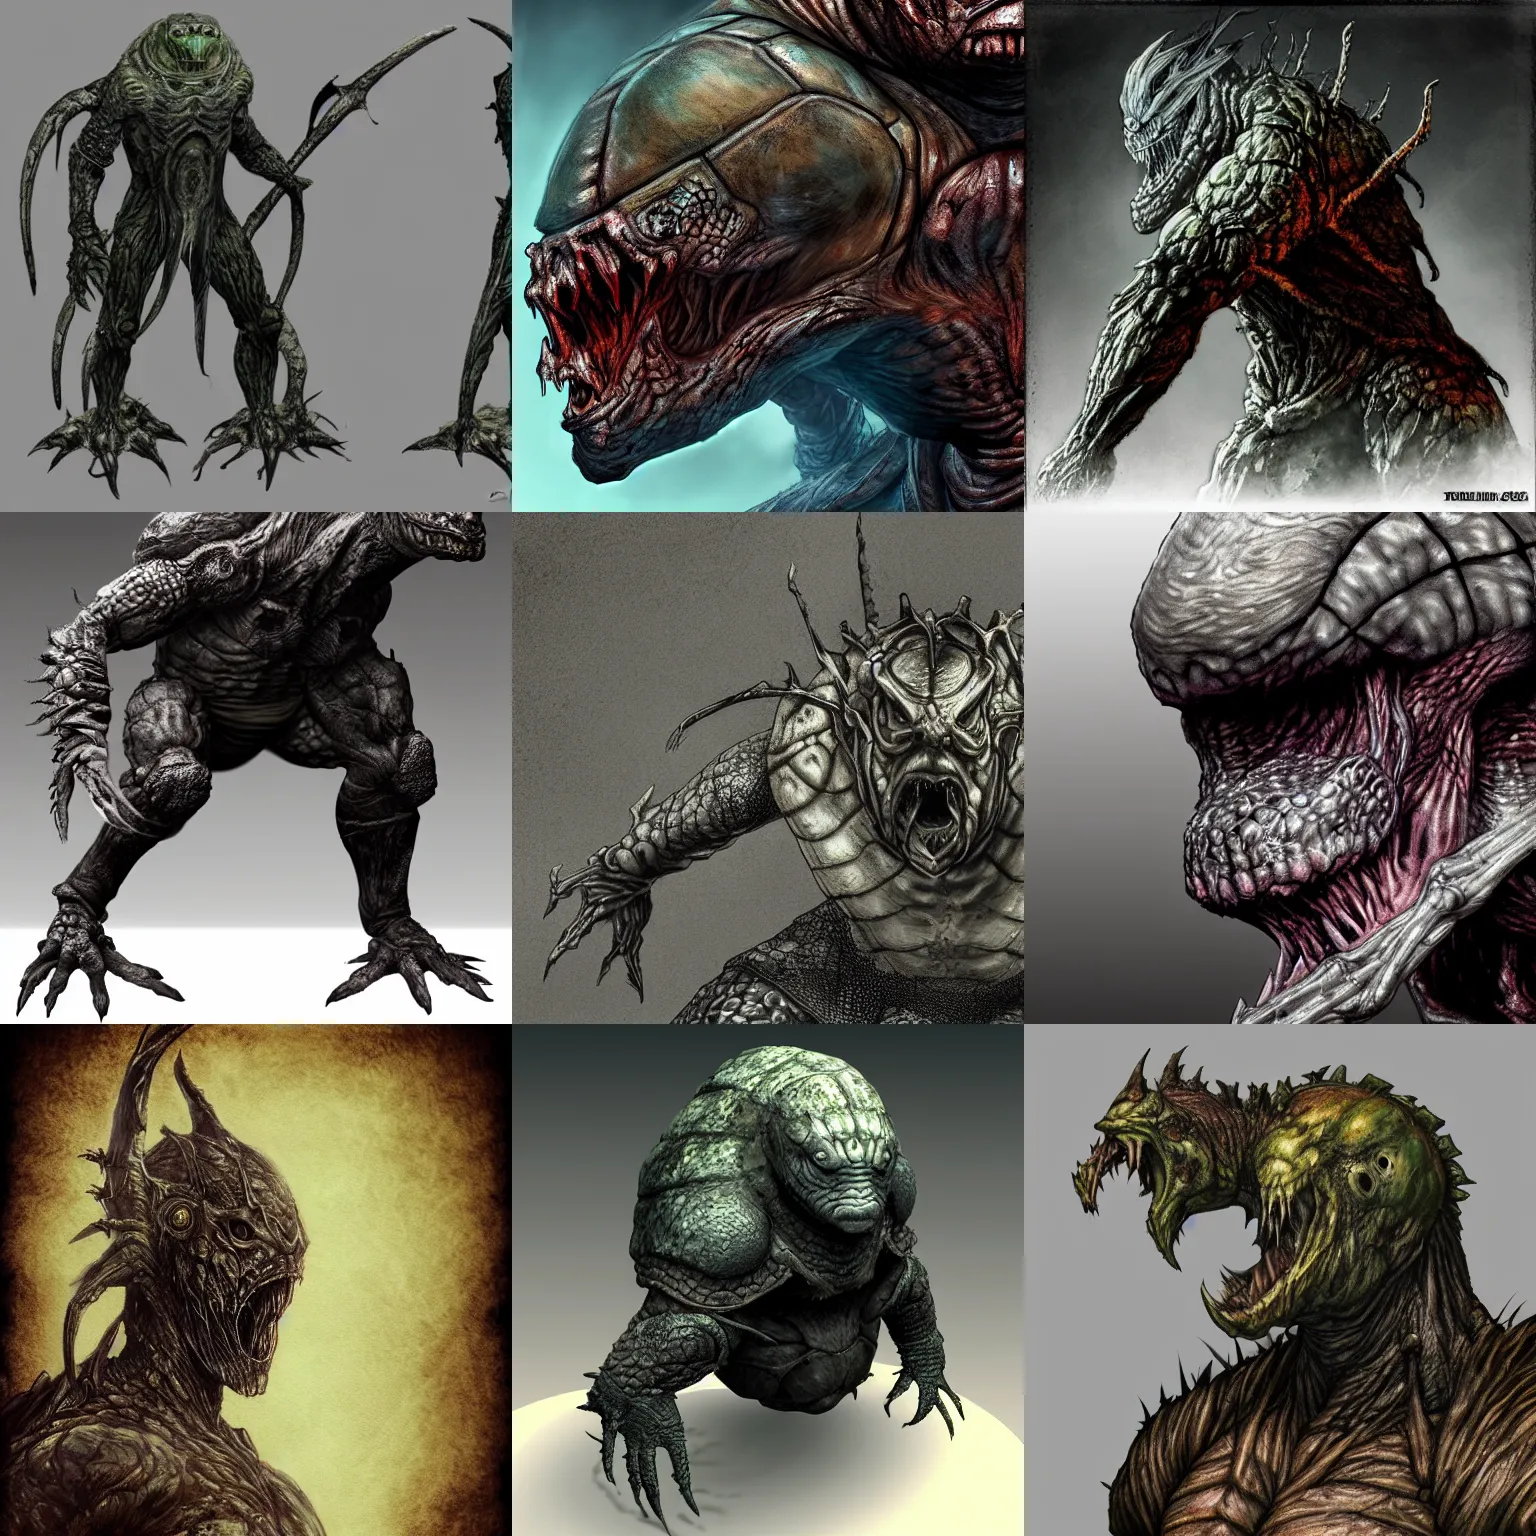 Prompt: elden ring, dark souls, humanoid turtle monster, photorealistic, grimdark, gruesome, front view, side view